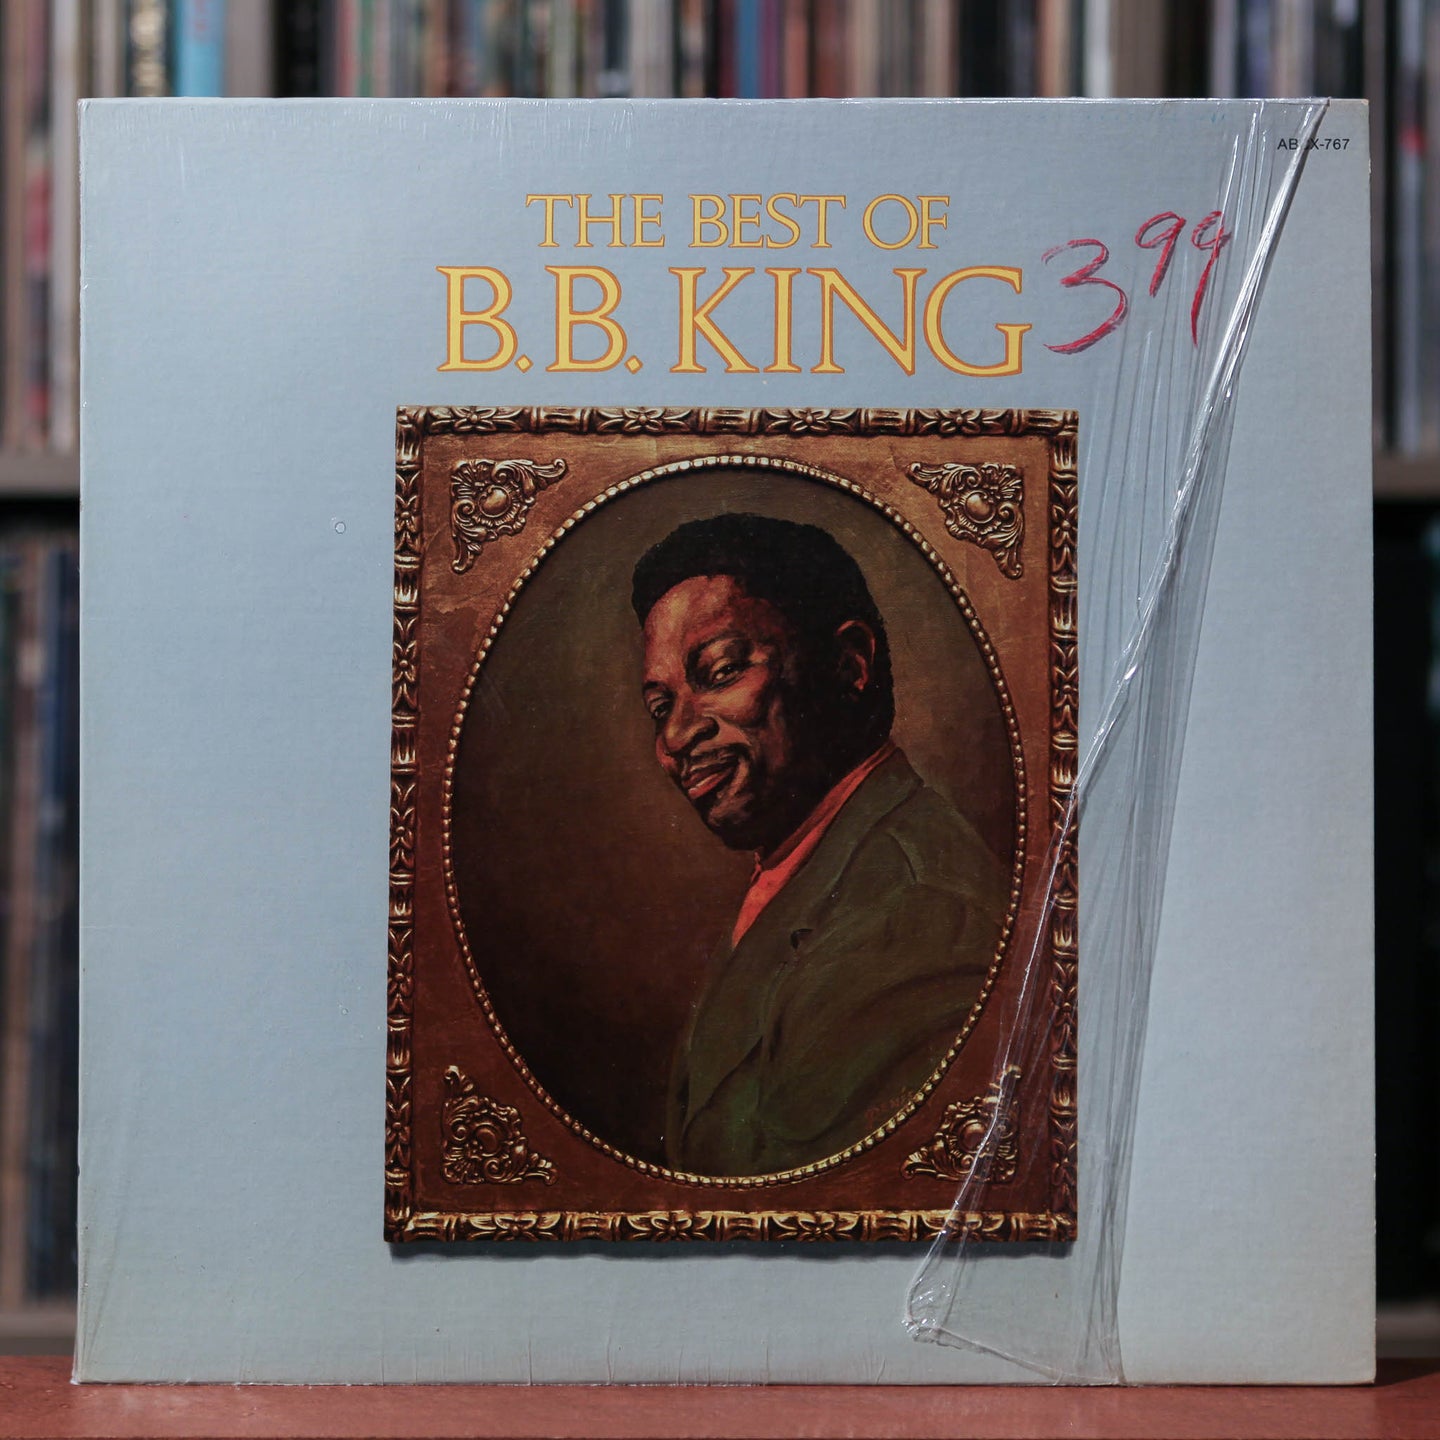 B.B. King - The Best Of B.B. King - 1973 ABC/Dunhill Canada, VG+/VG+